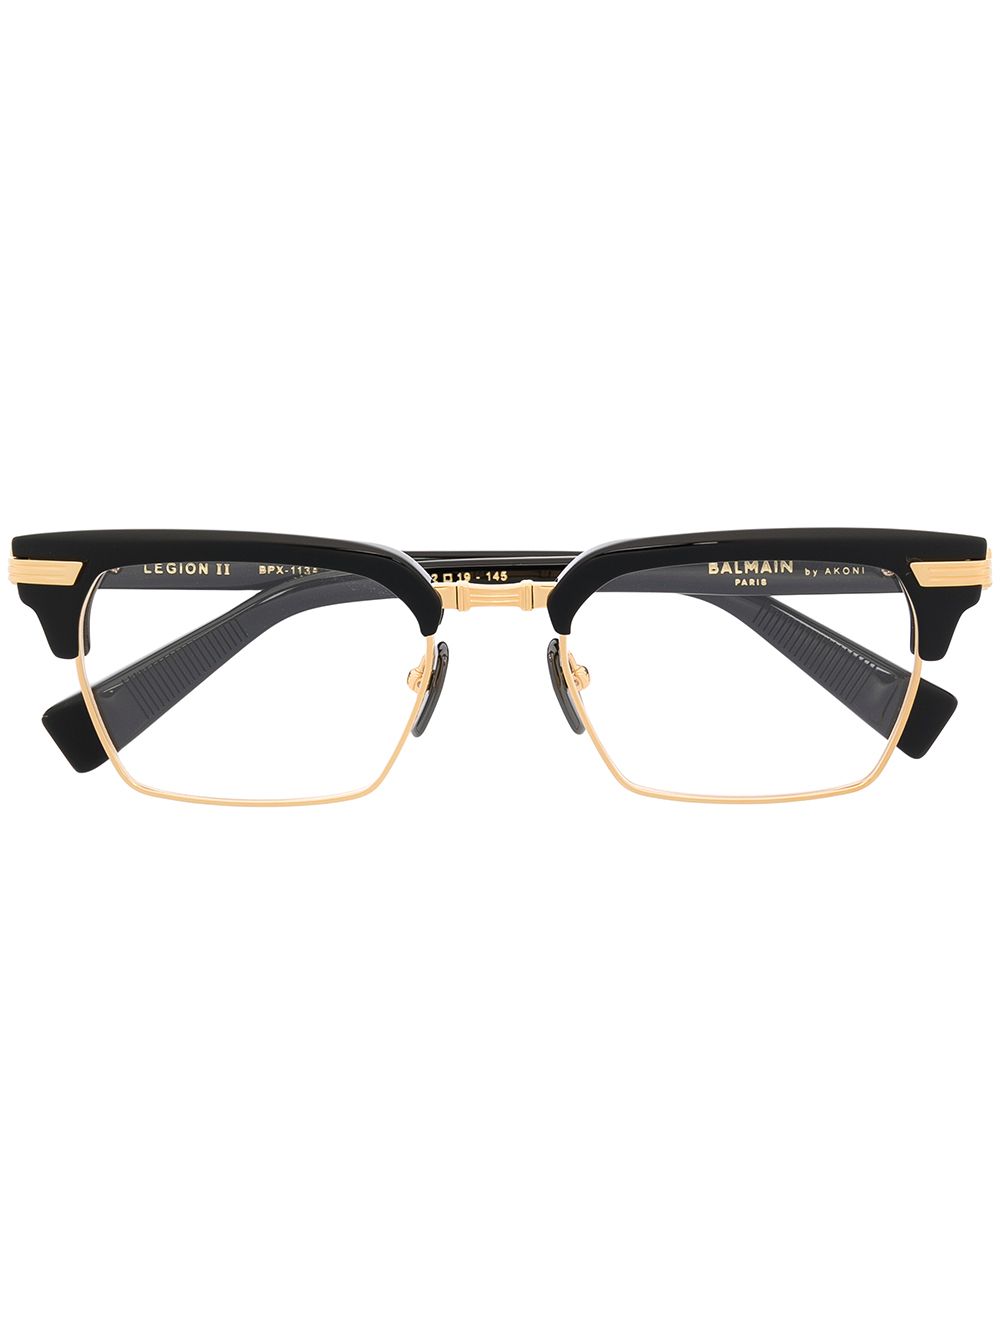 Balmain Eyewear Legion II rectangular frame glasses - Black von Balmain Eyewear